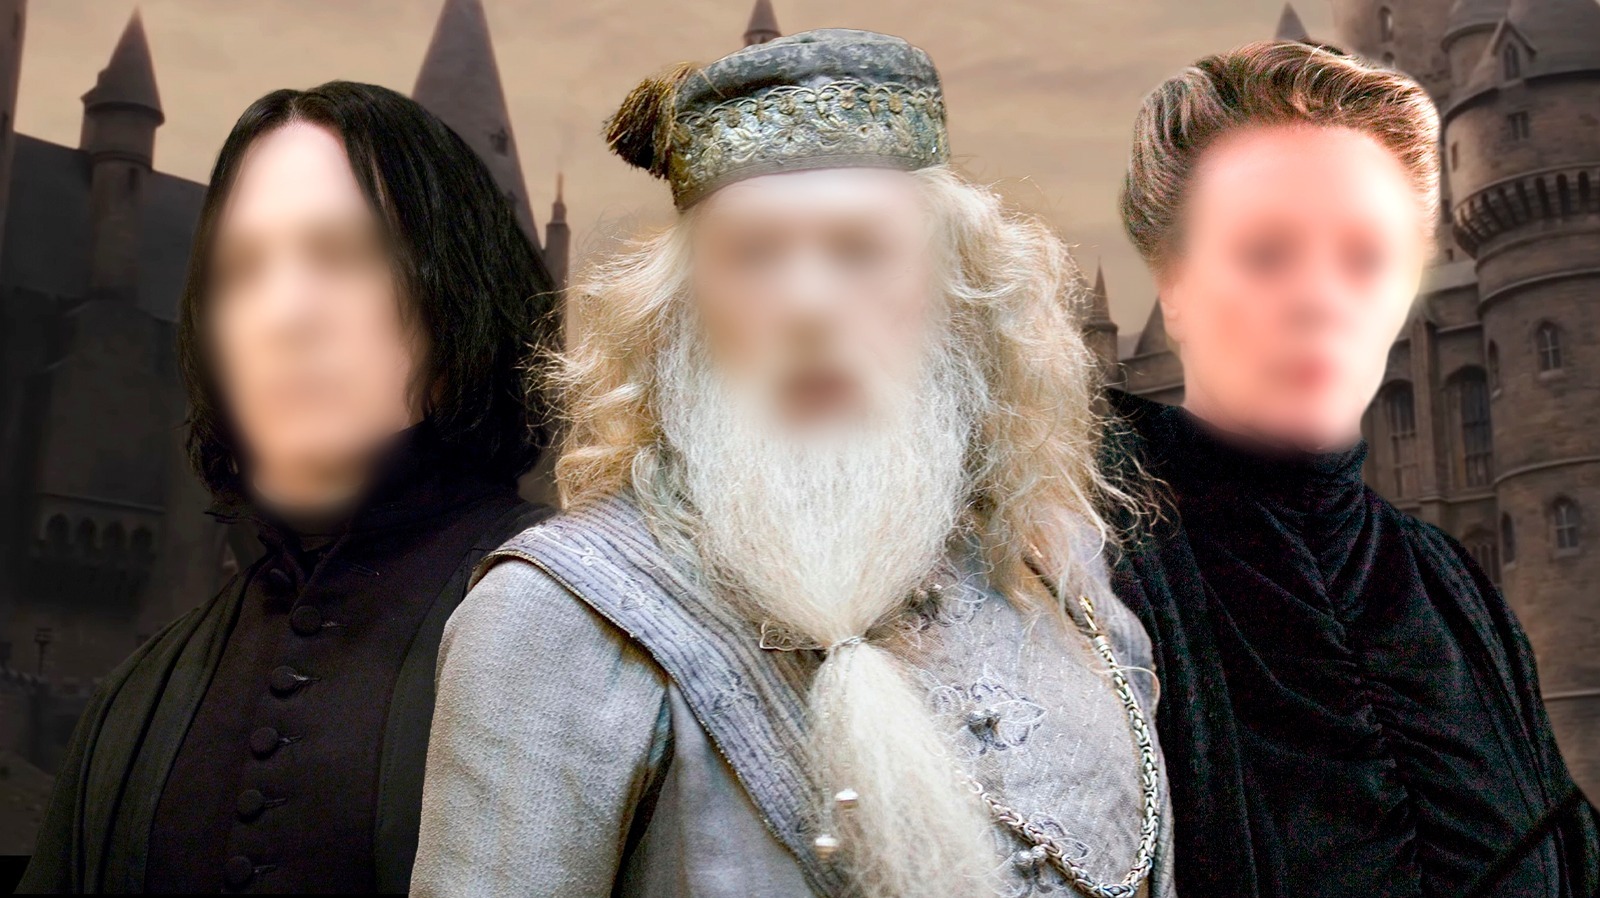 Harry Potter' TV Show: Dream Cast, Actor Predictions for HBO Max – TVLine